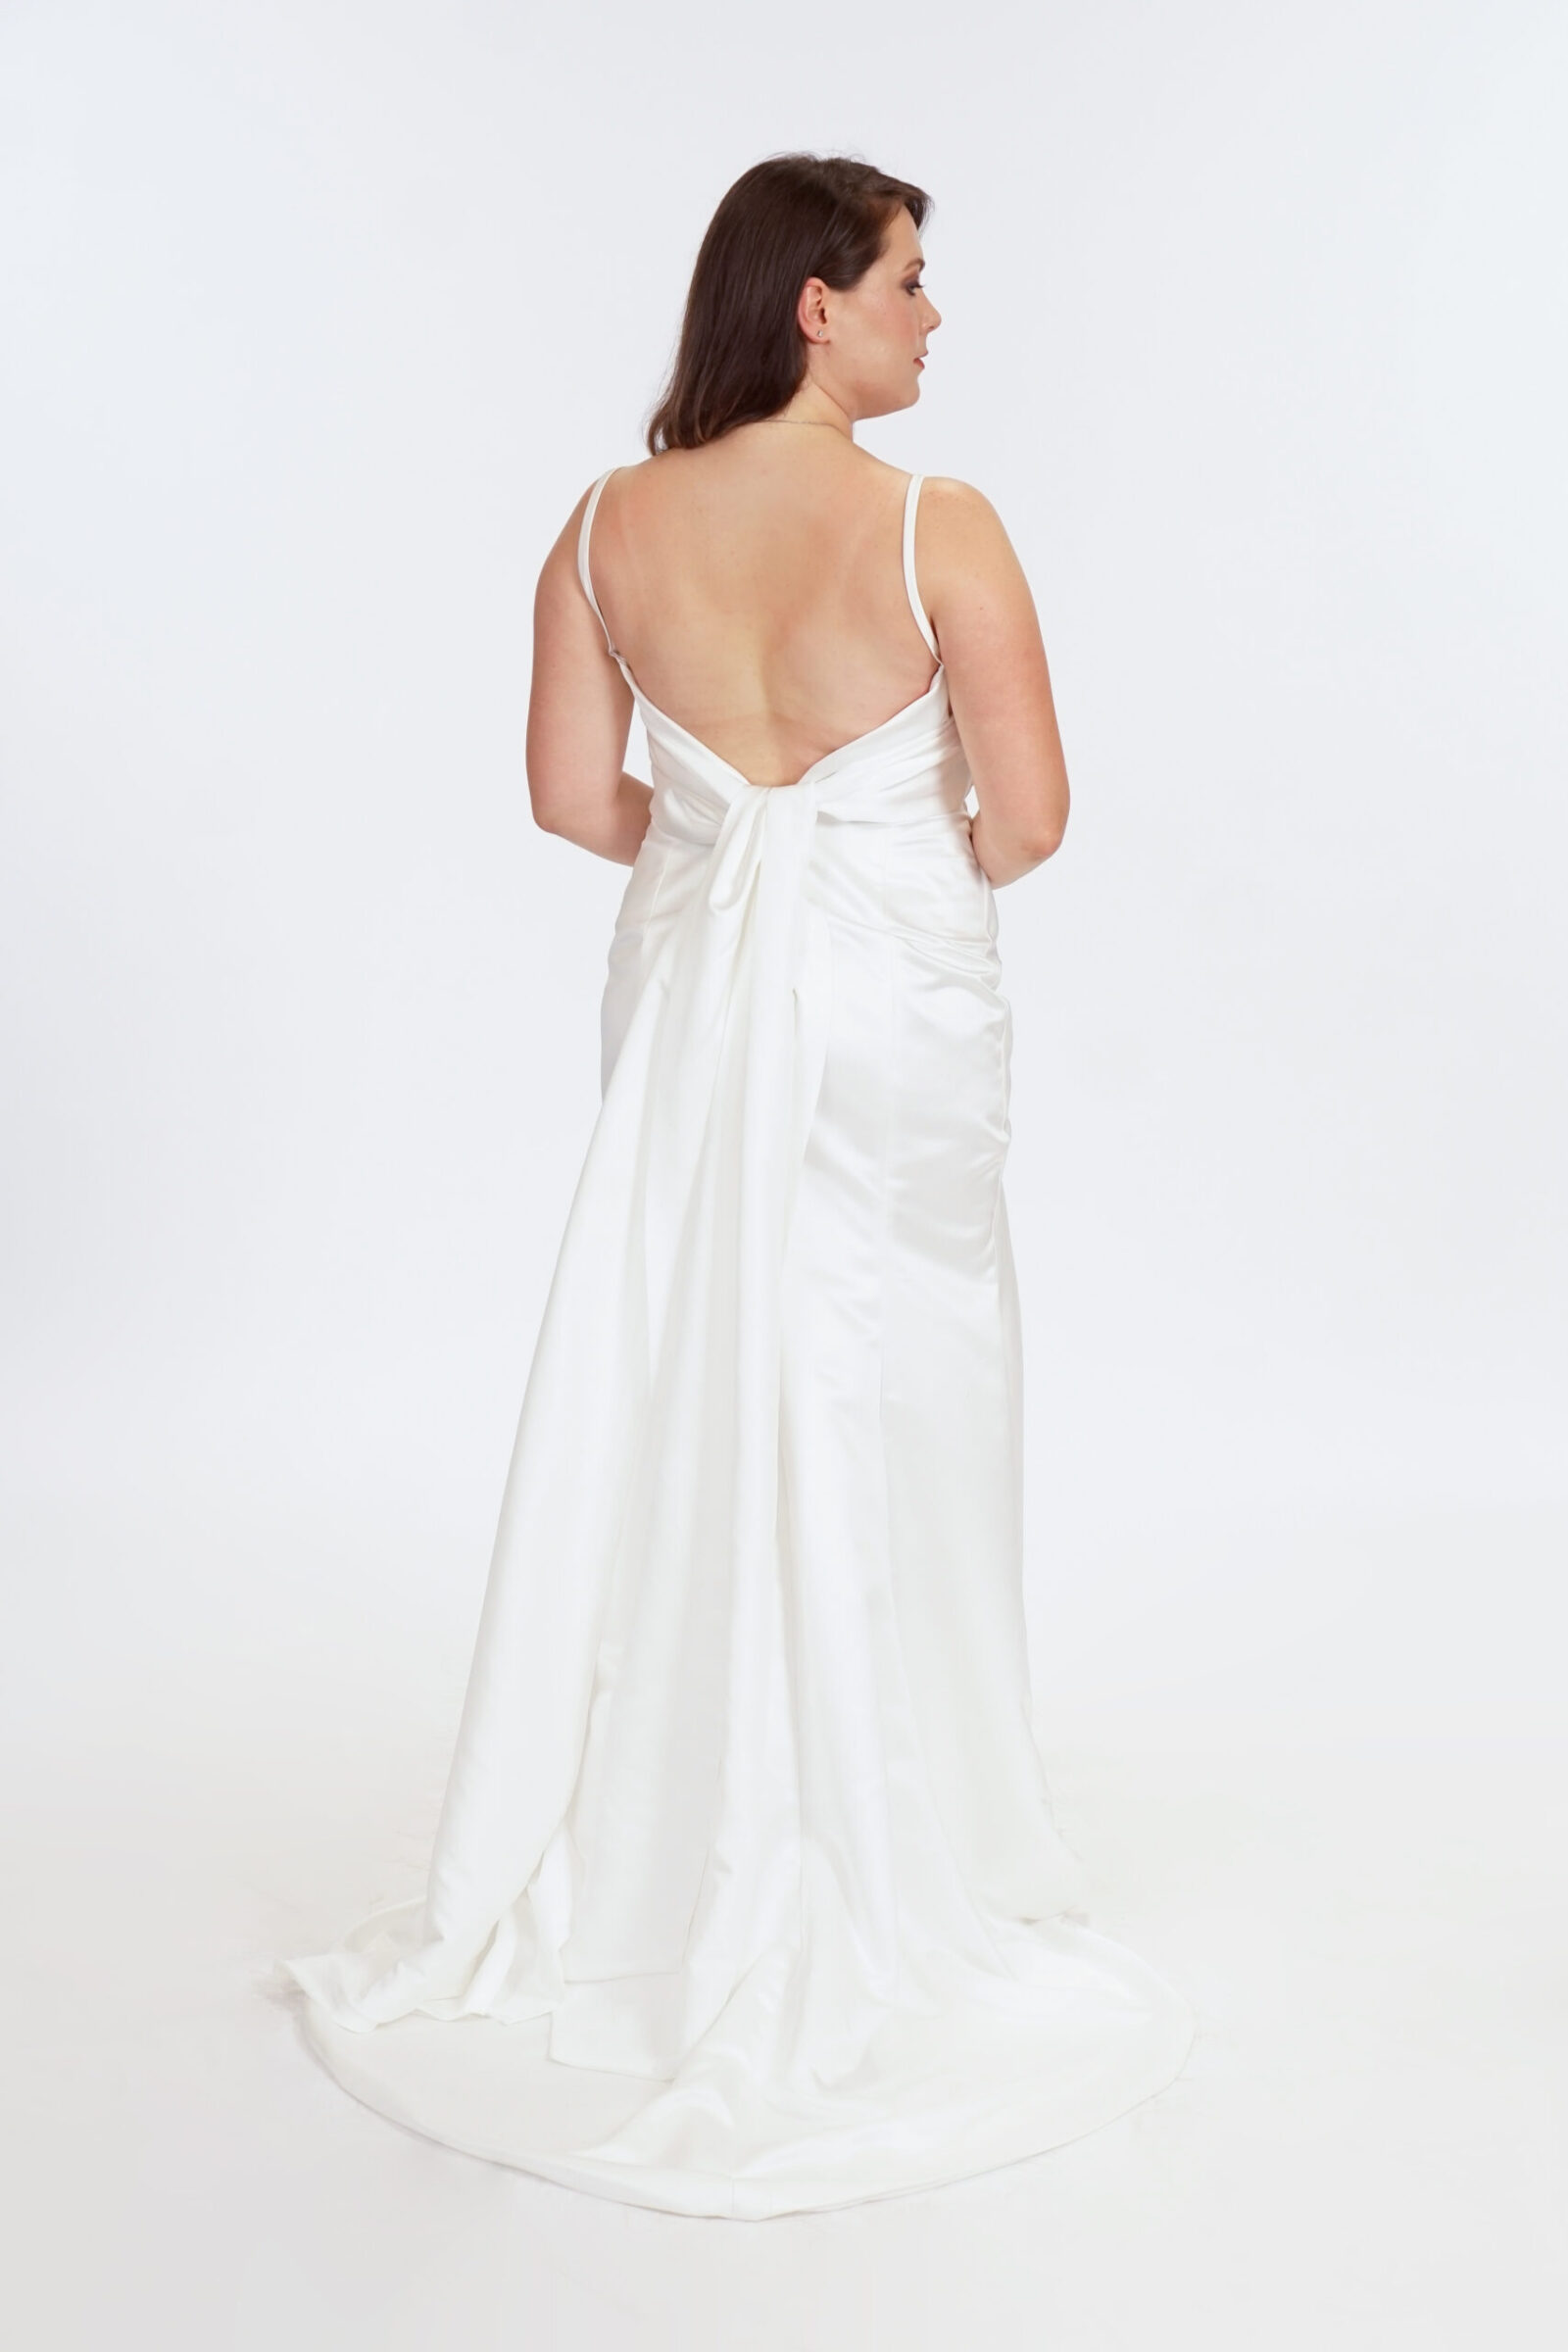 Backless White Wedding dress